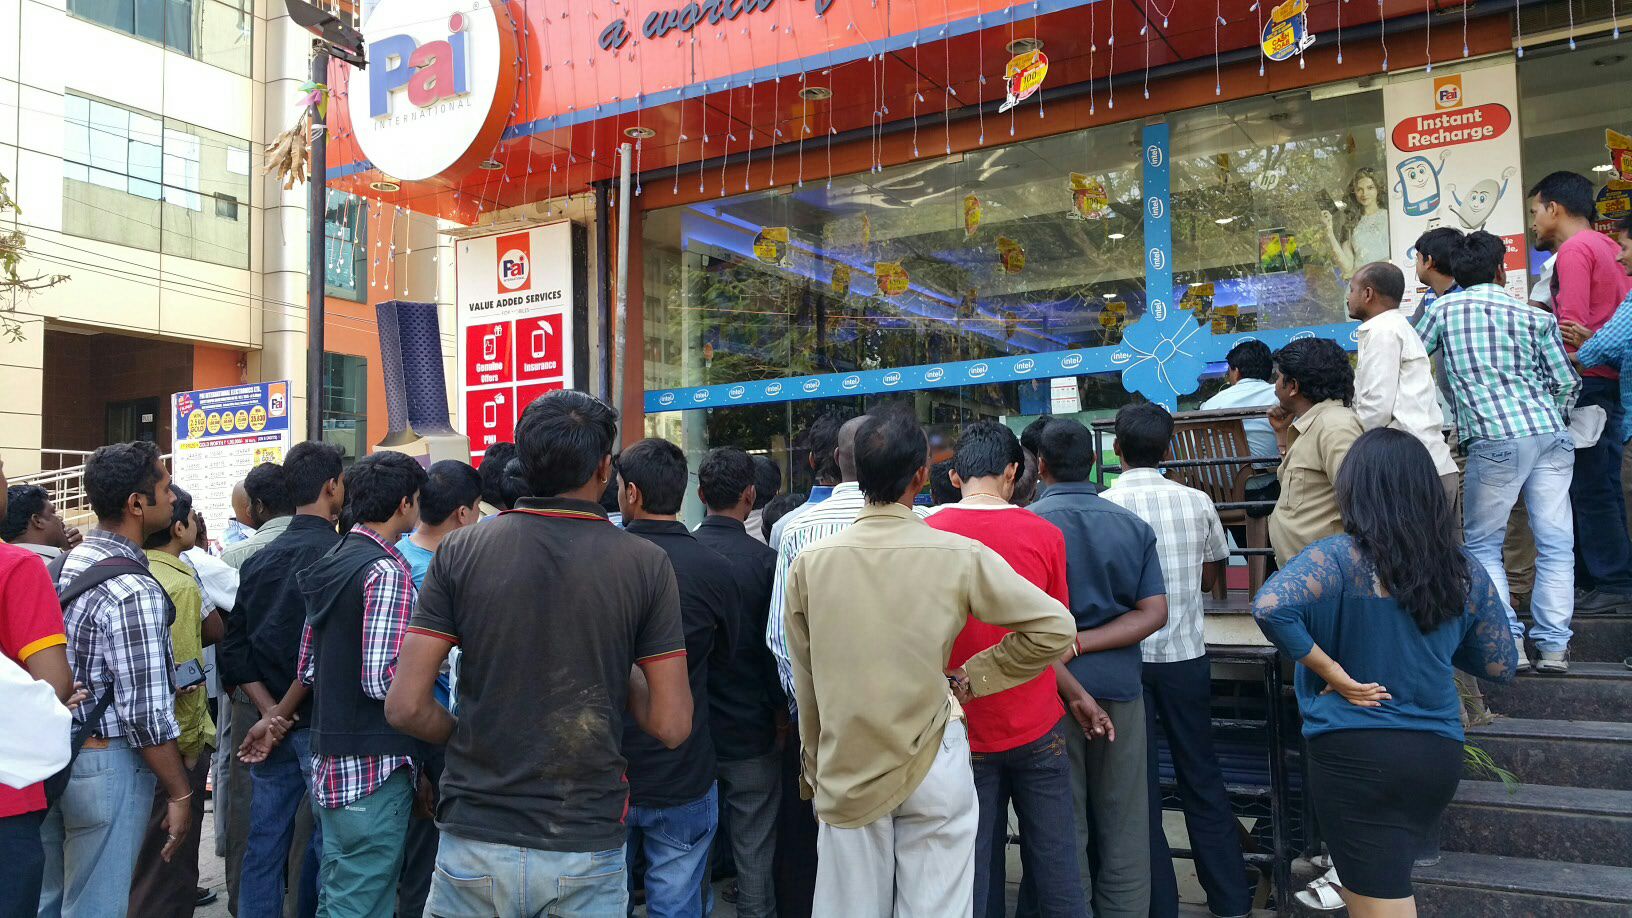 Crowd watching cricket match outside shop